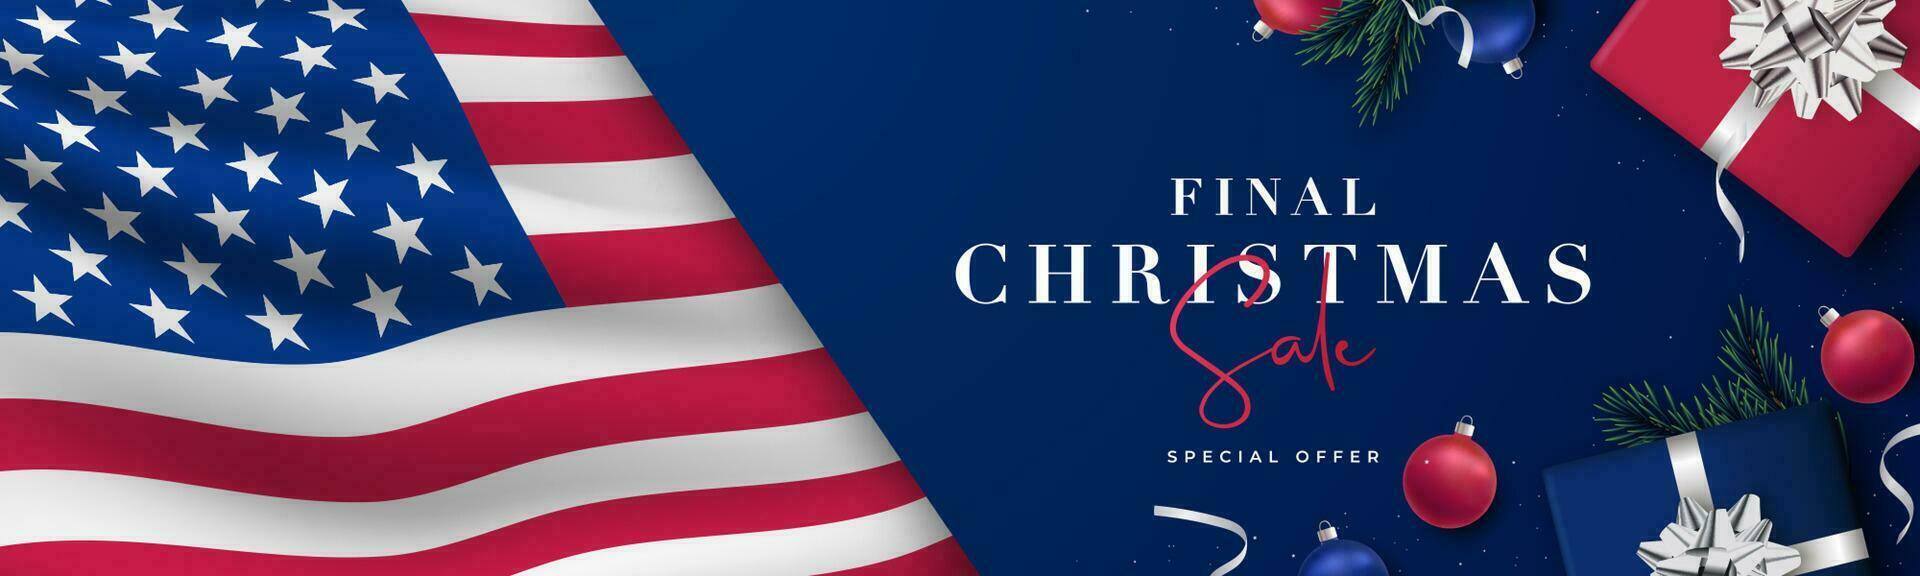 Christmas patriotic banner with USA flag. vector